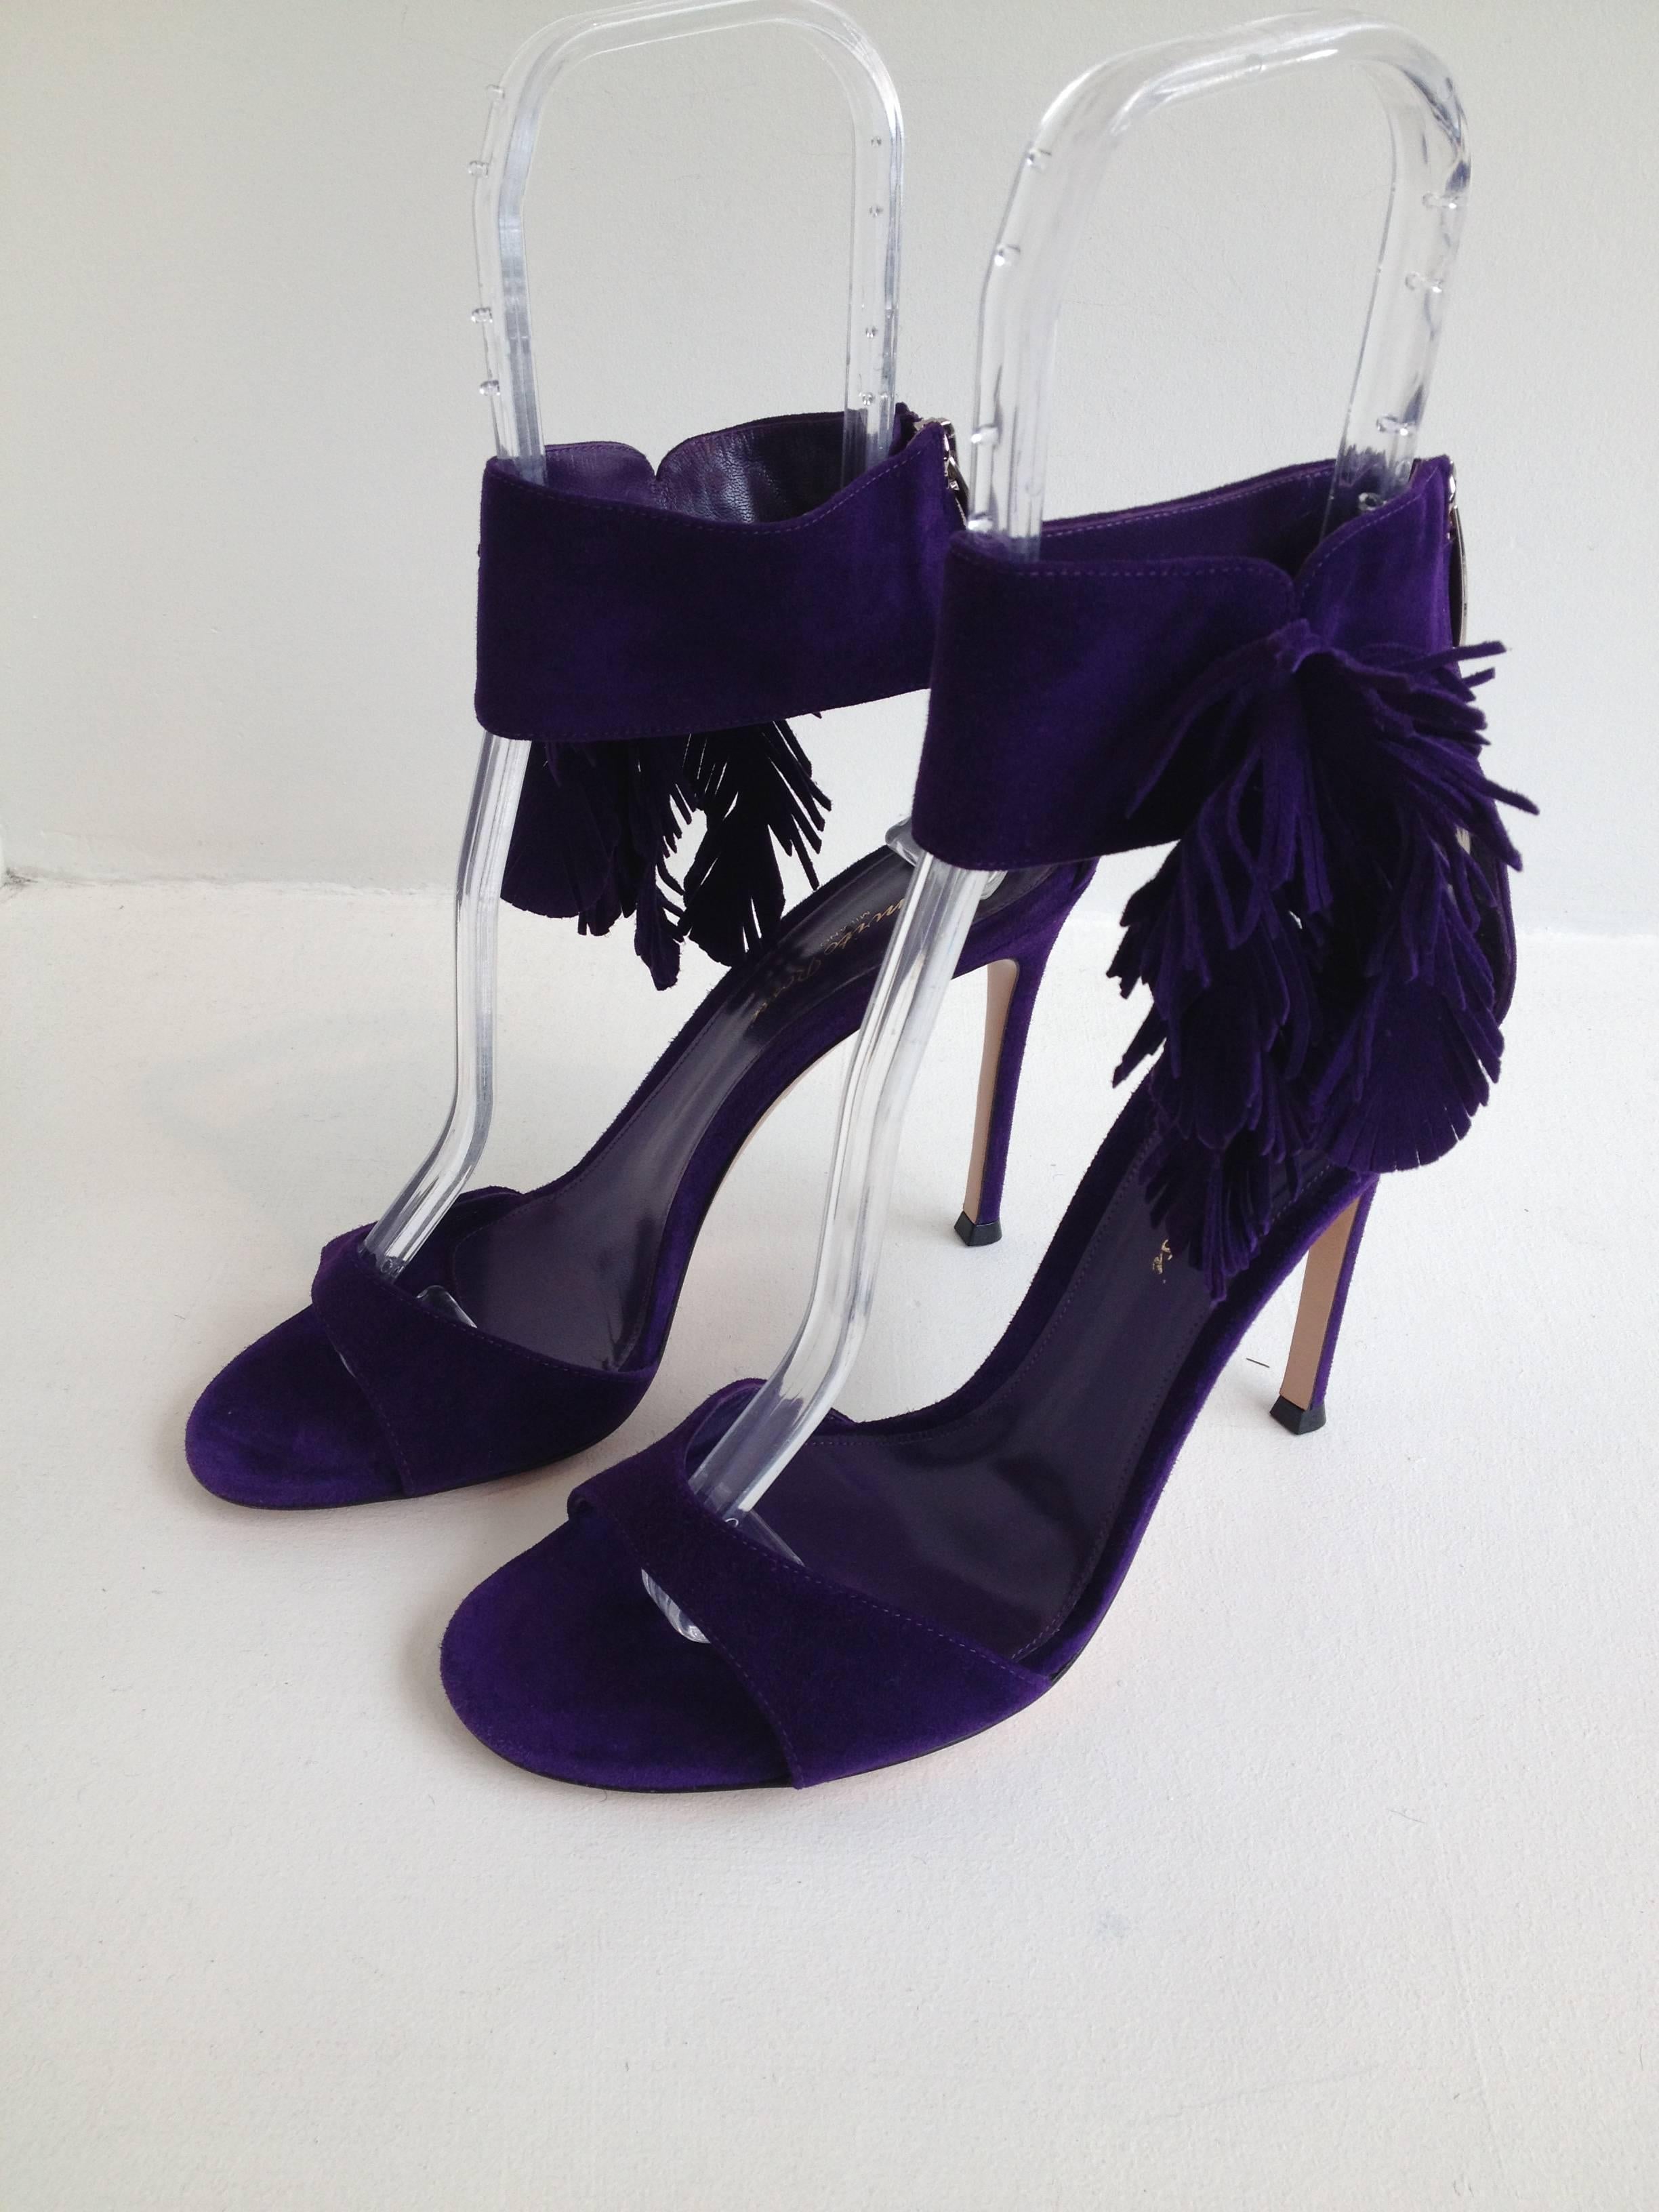 Gianvito Rossi Purple Suede Sandals In New Condition In San Francisco, CA